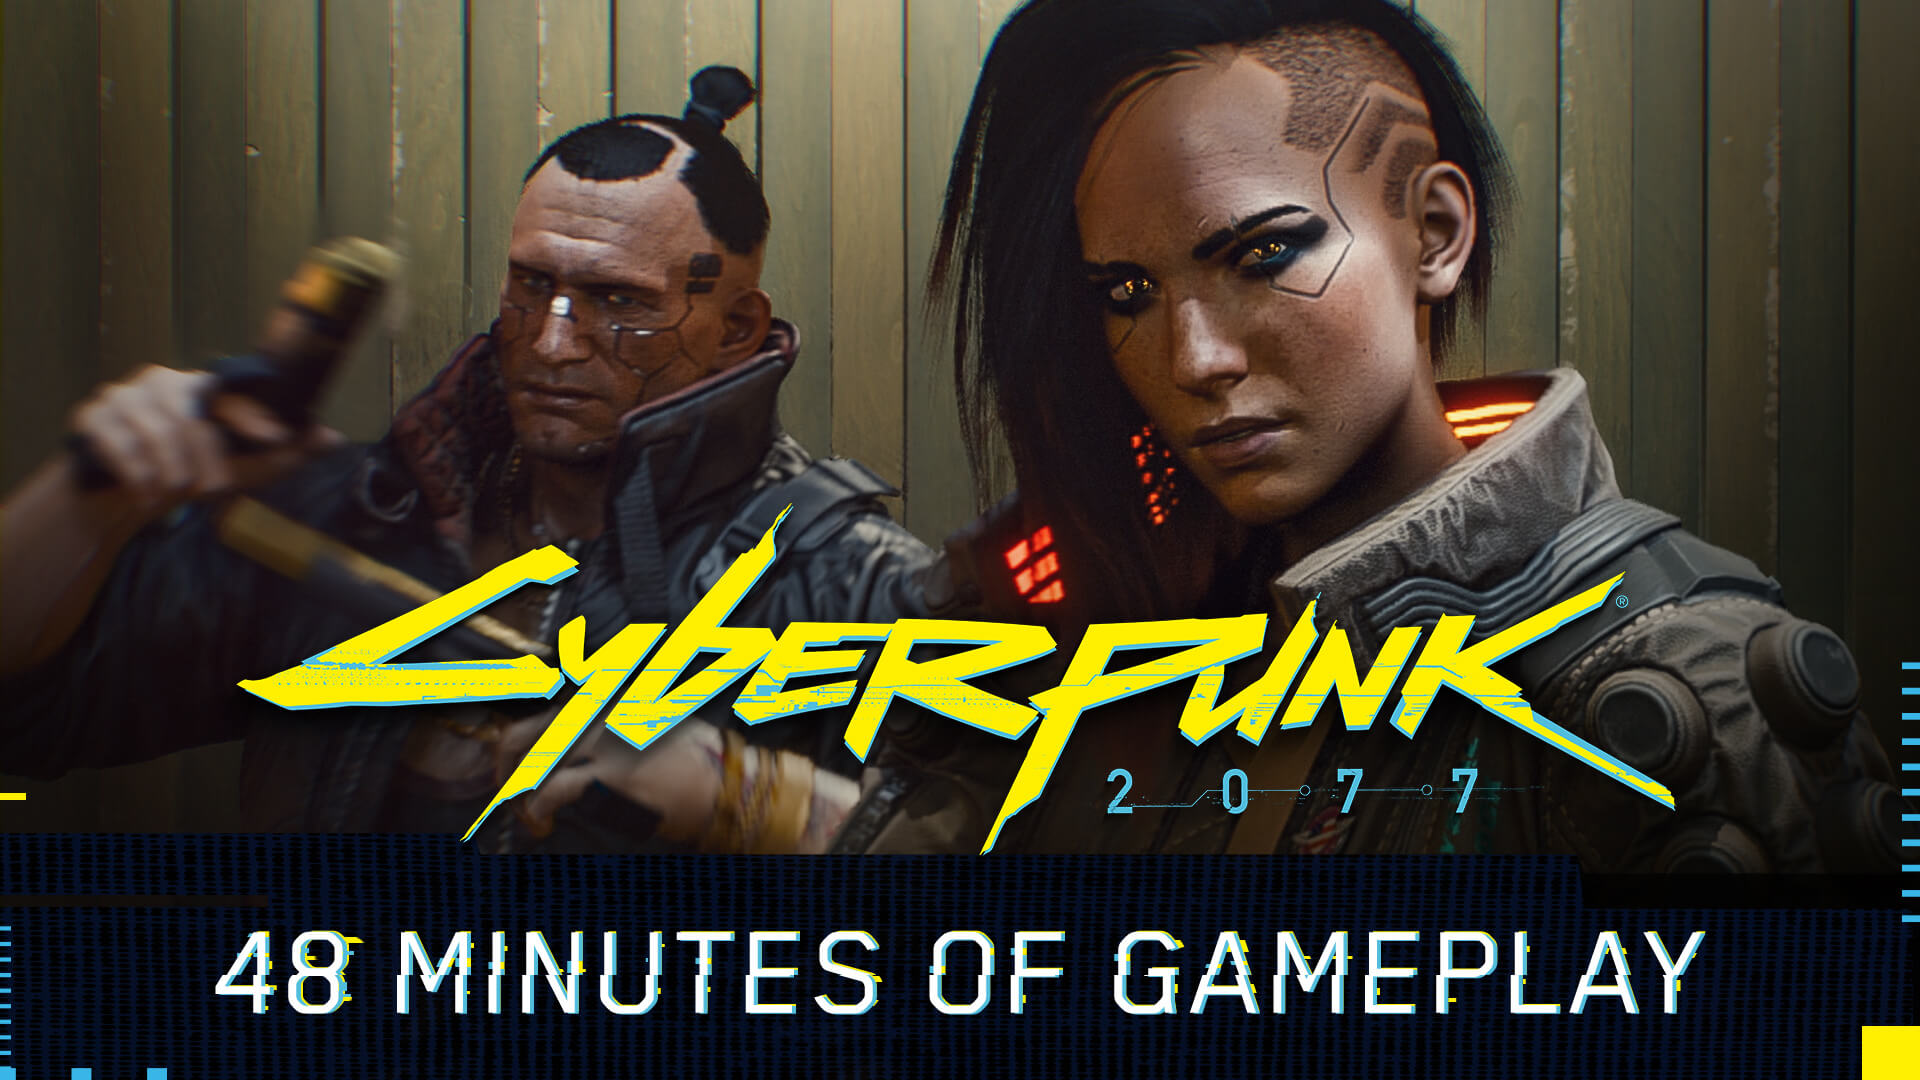 No te pierdas este gameplay de Cyberpunk 2077